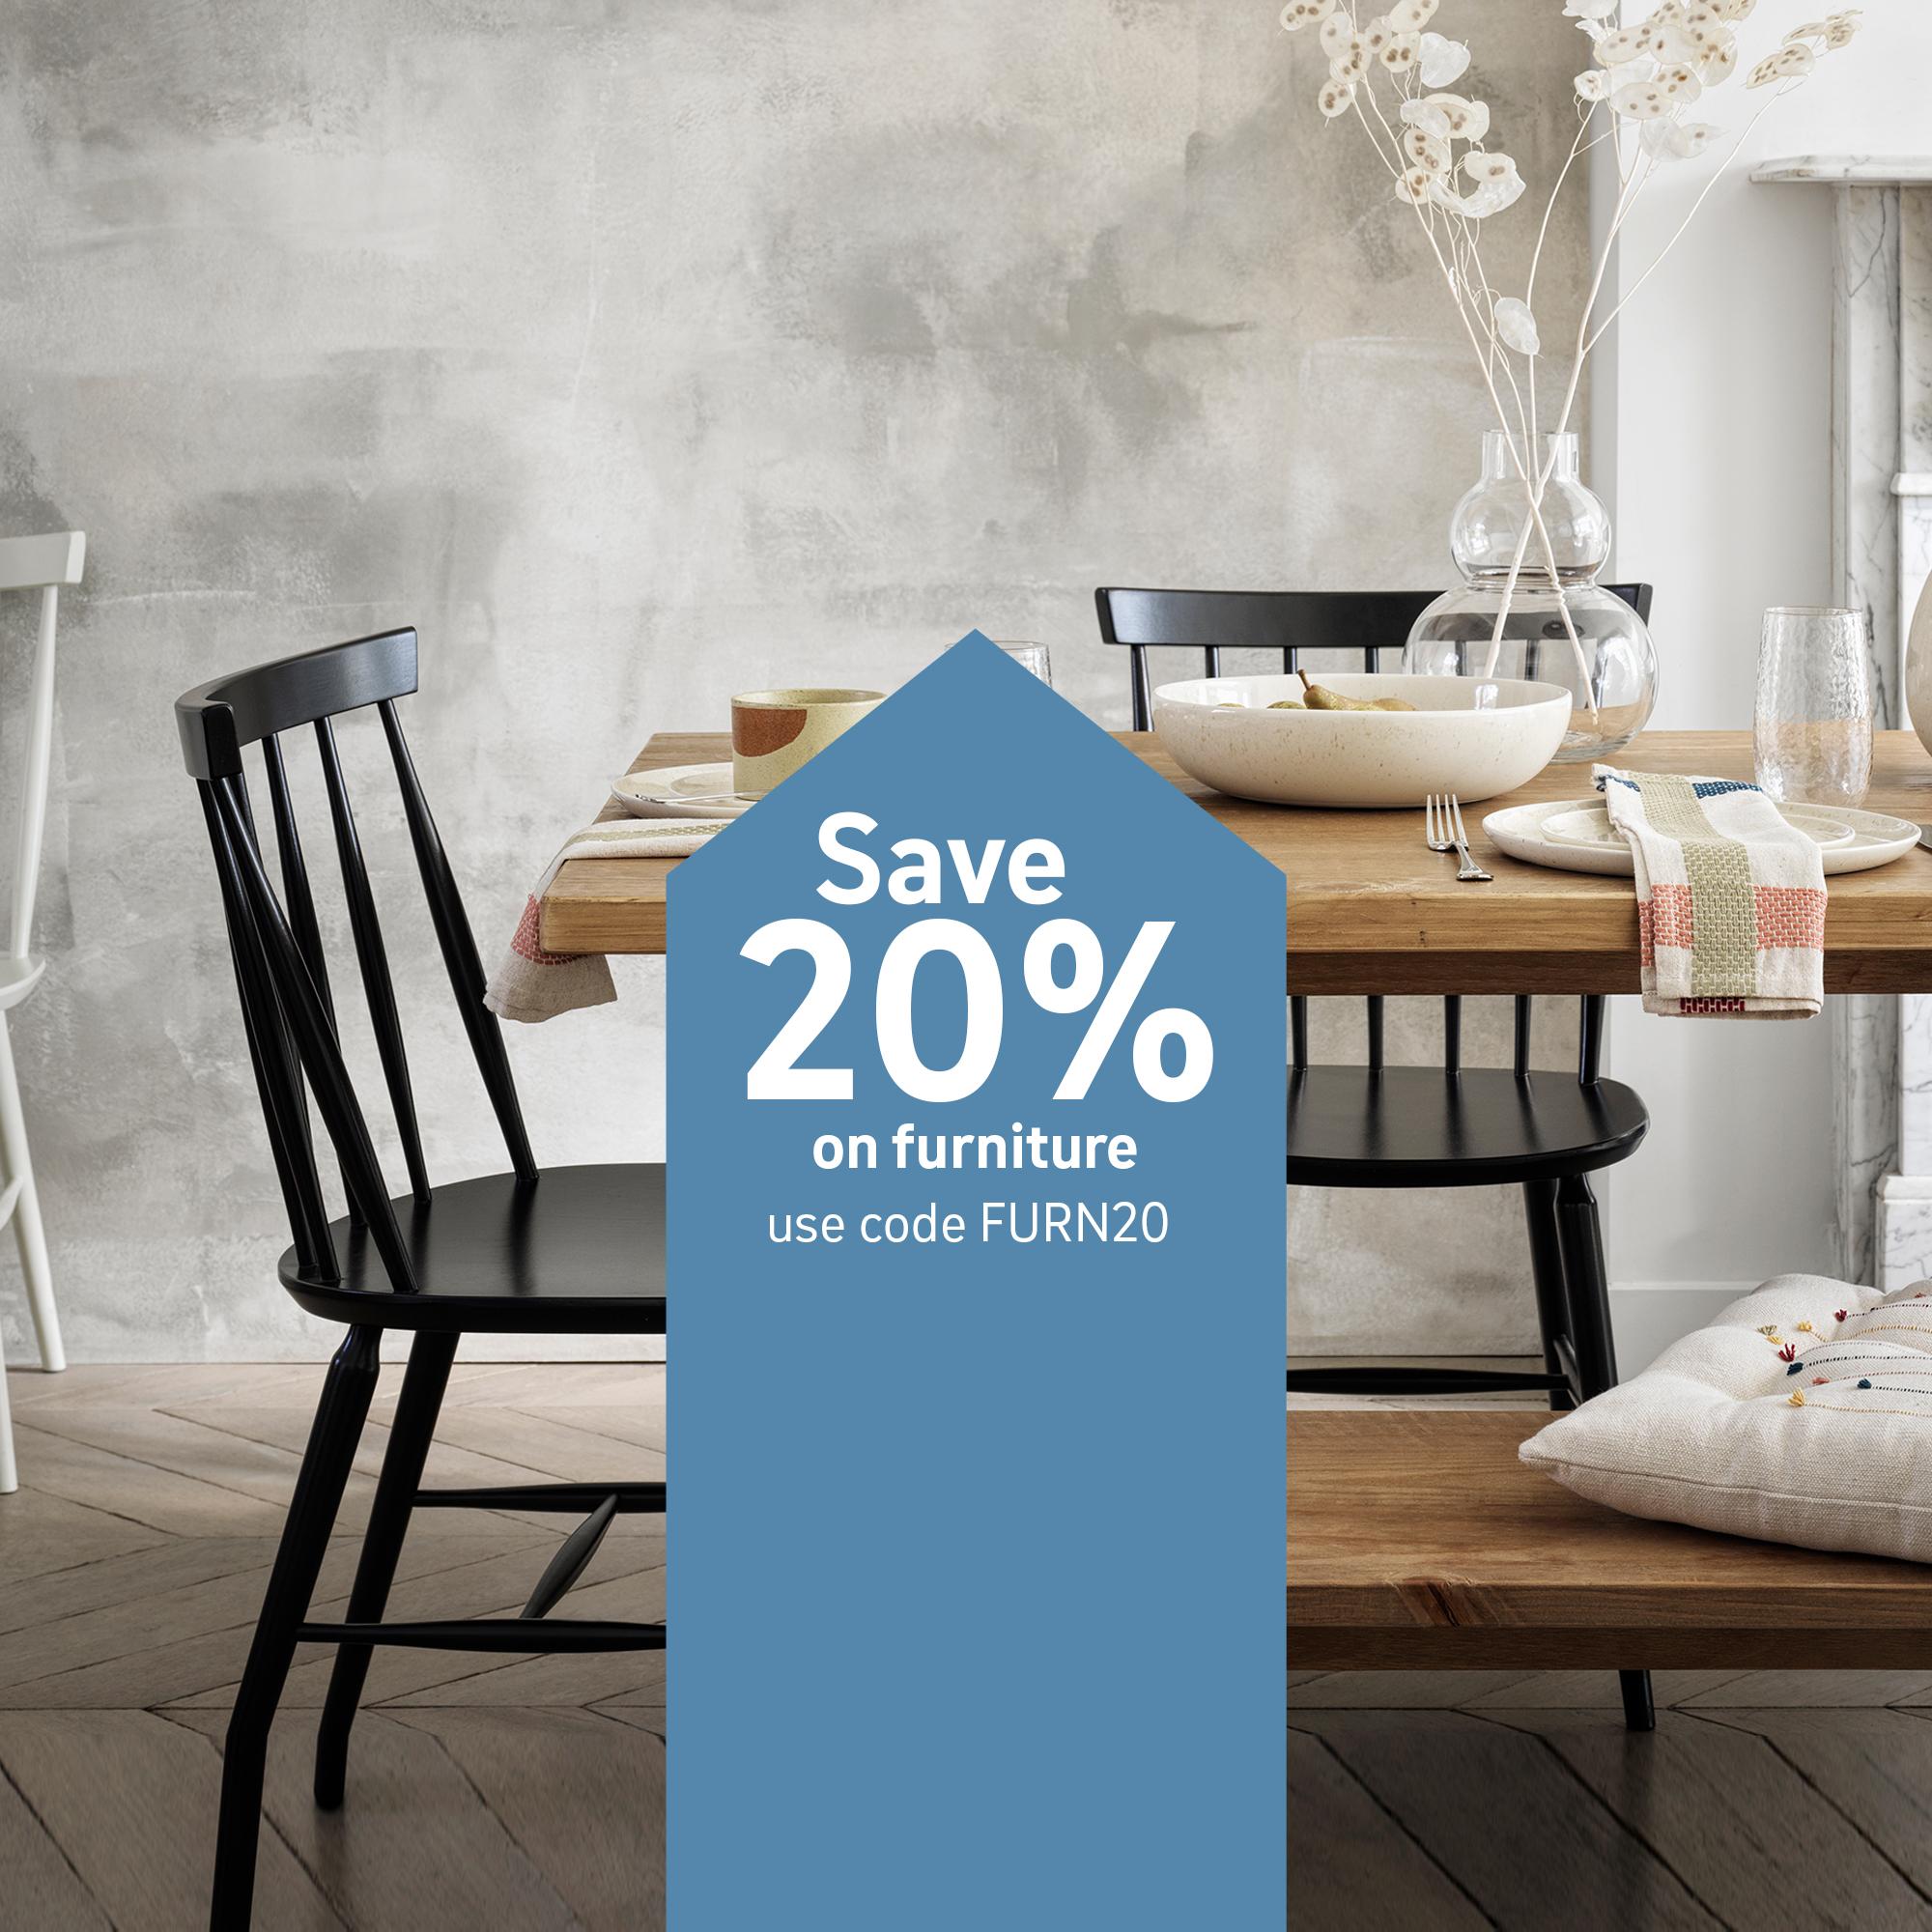 Save 20% on furniture using code FURN20.